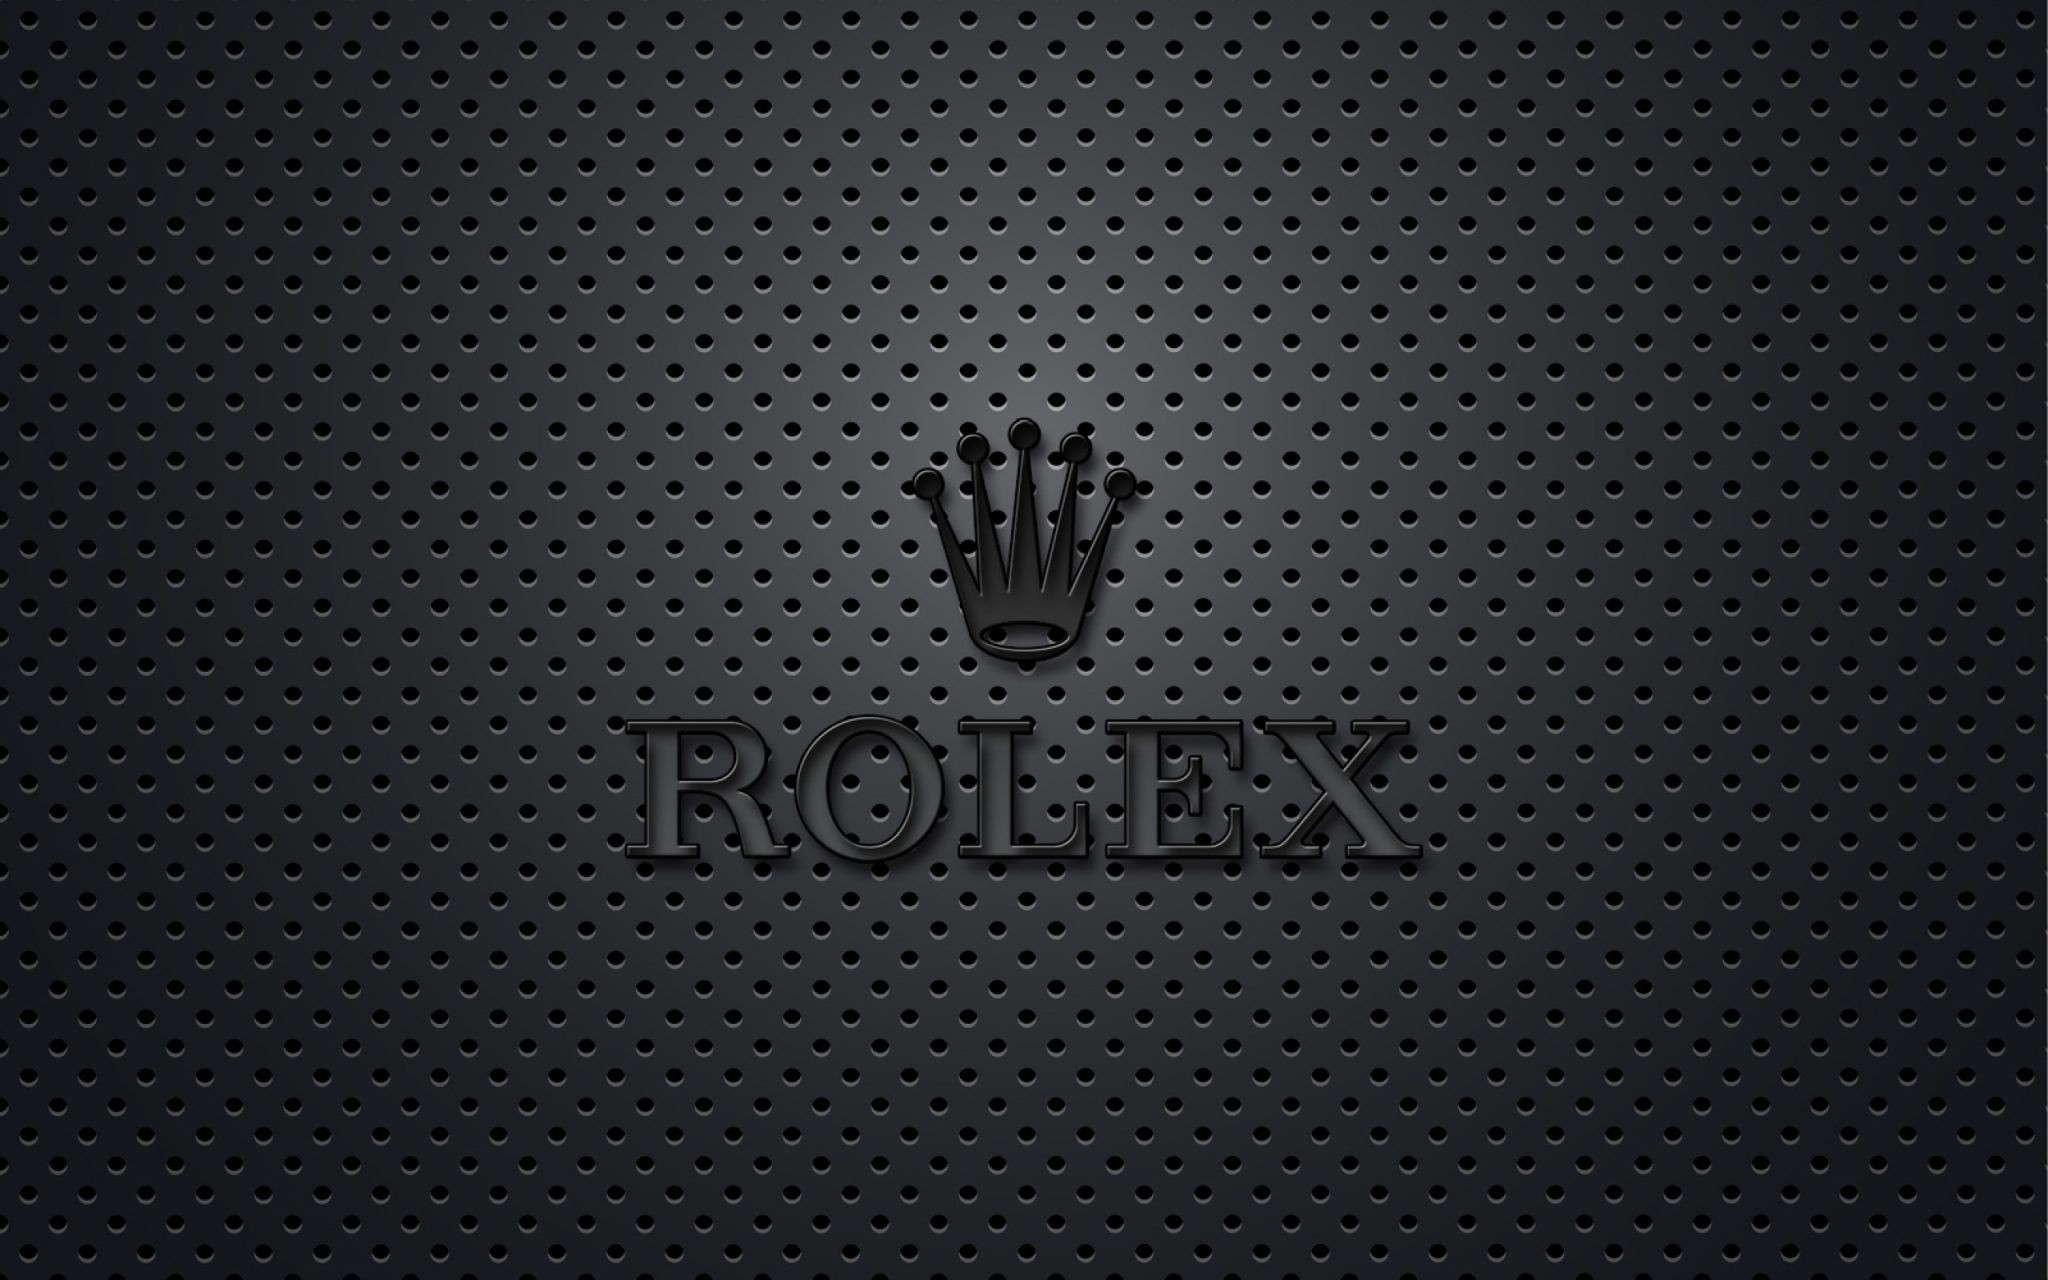 Rolex Screensaver Wallpapers